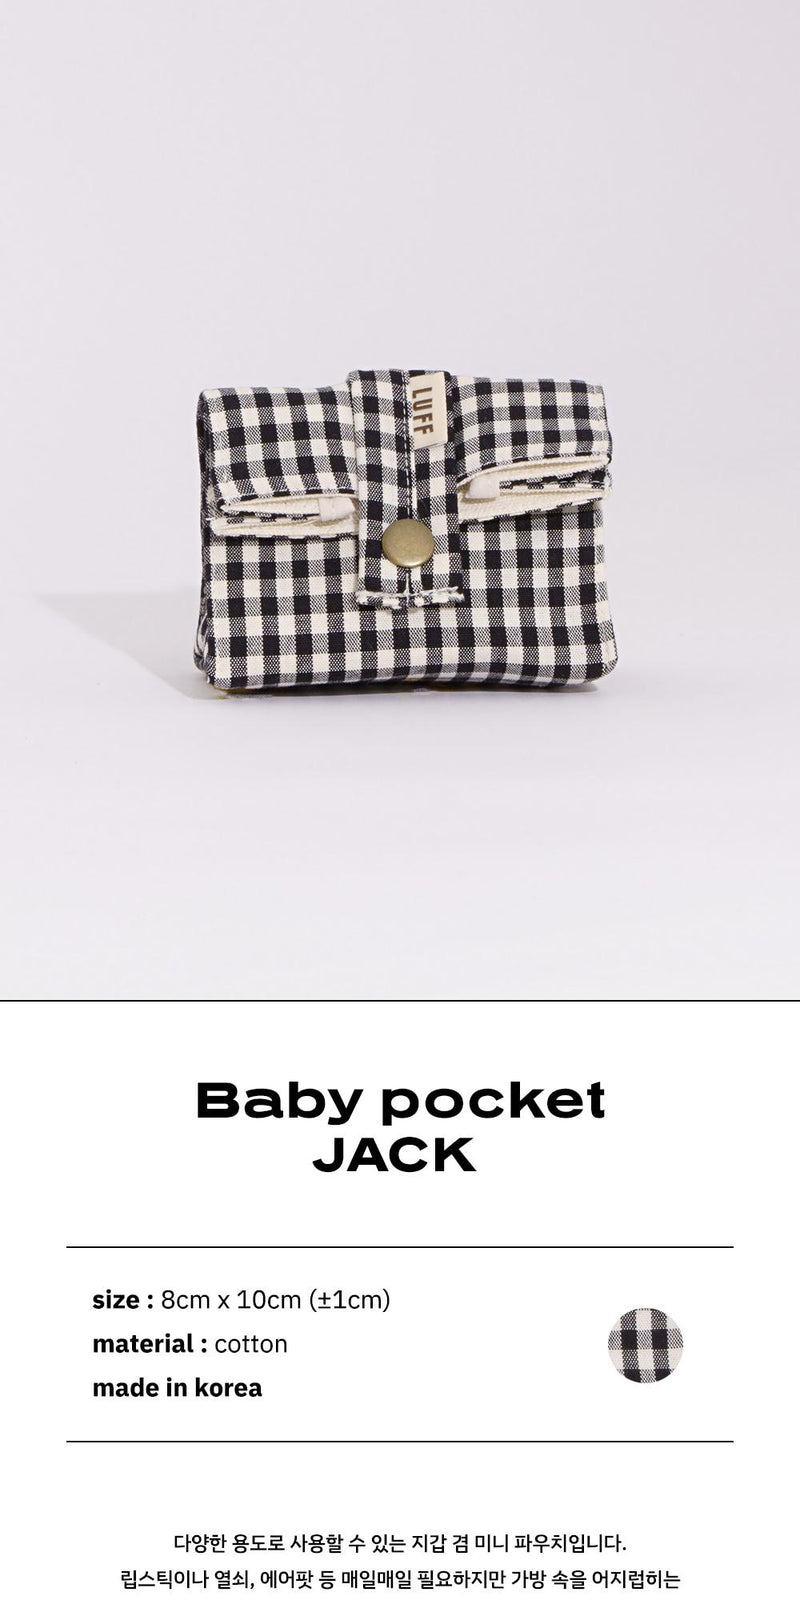 baby pocket - jack